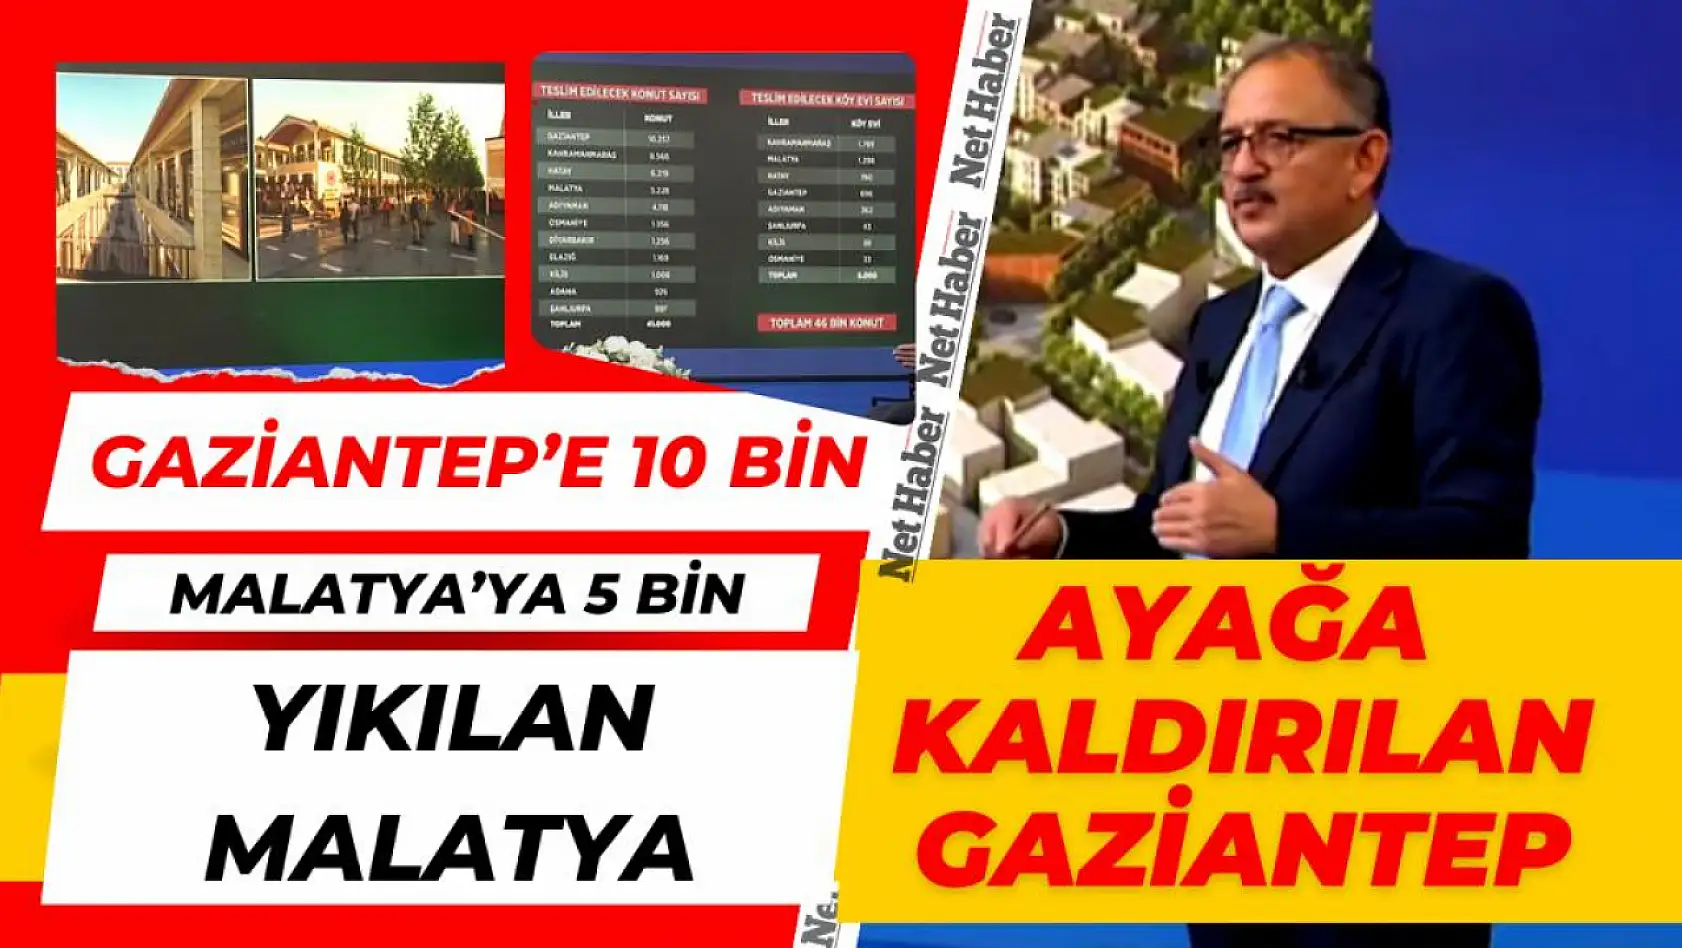 Gaziantep'e 10 bin Malatya'ya 5 bin! Yıkılan Malatya ayağa kaldırılan Gaziantep!